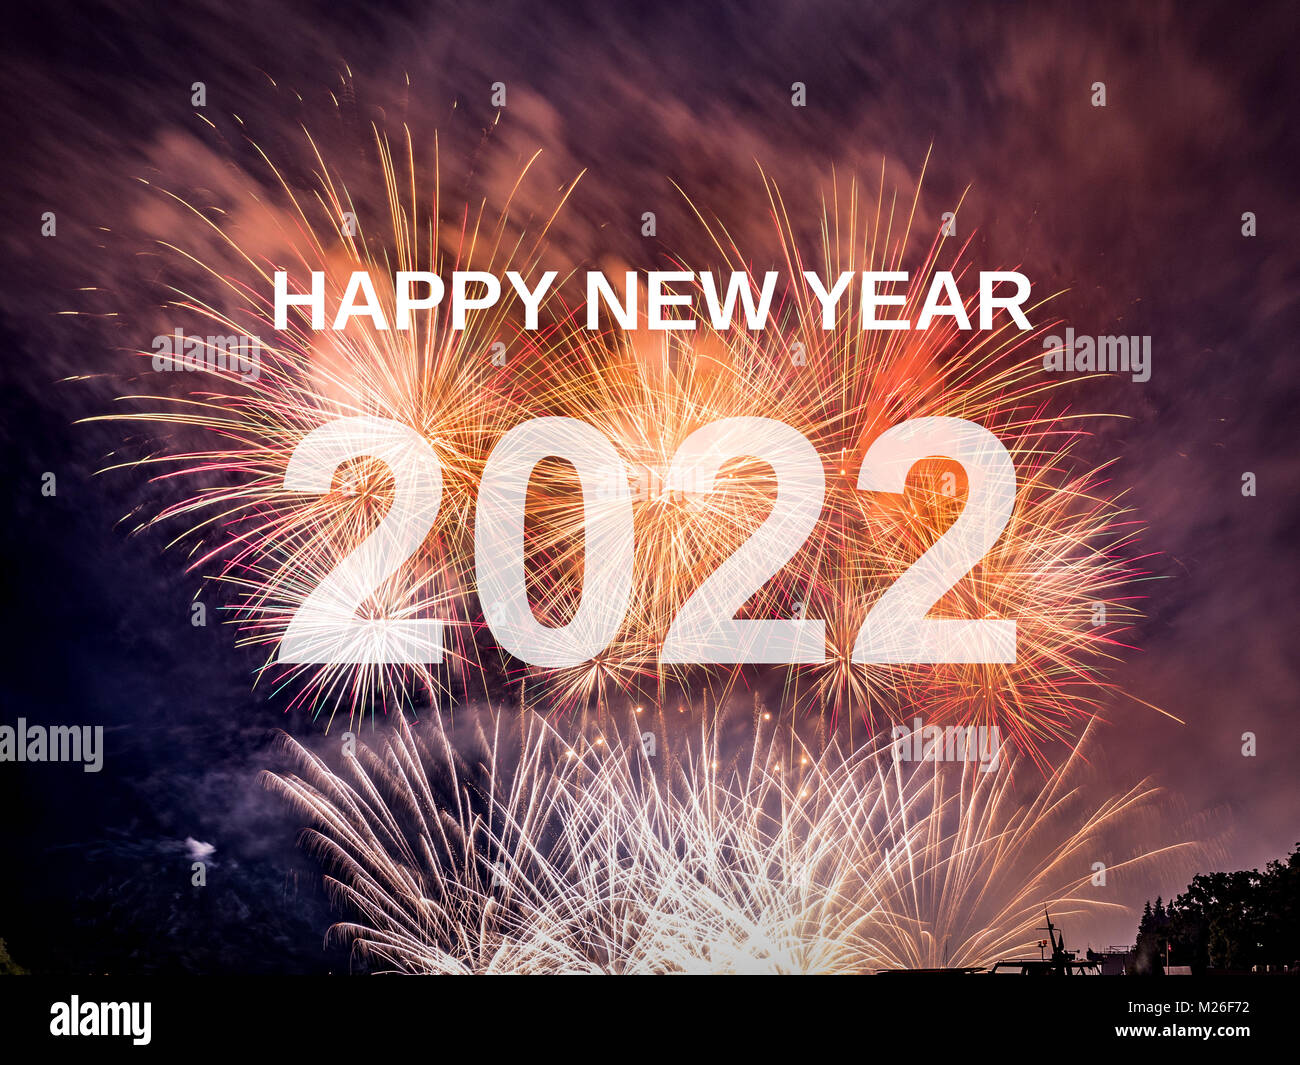 Happy new year 2022 with fireworks background. Celebration New Year 2022 Stock Photo